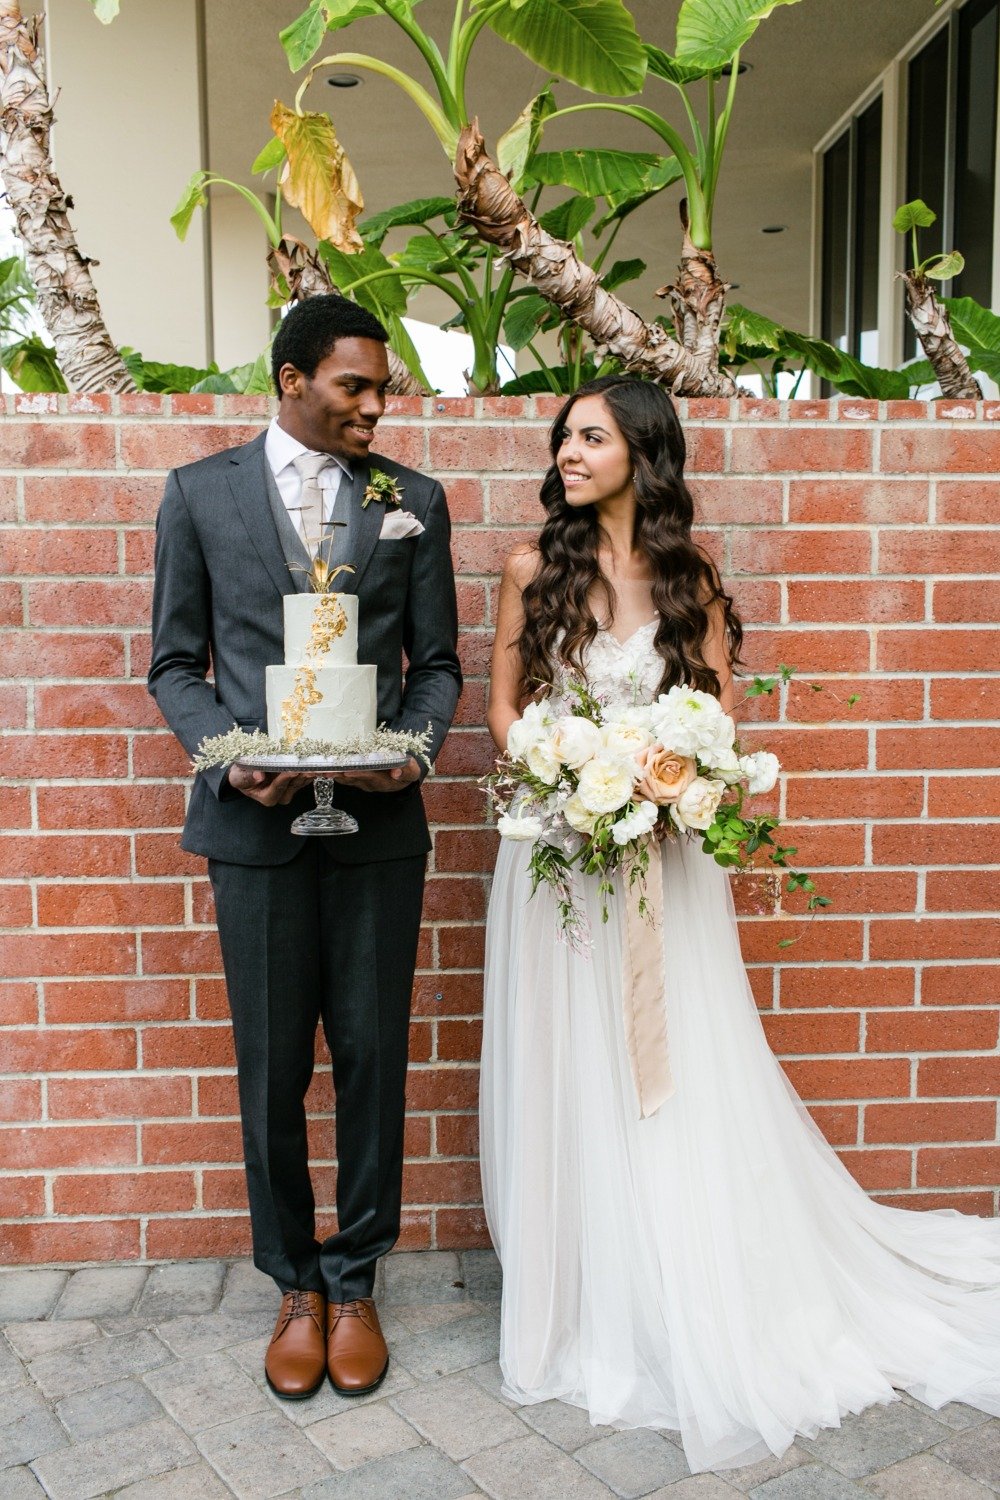 Wedding bouquet and cake portrait